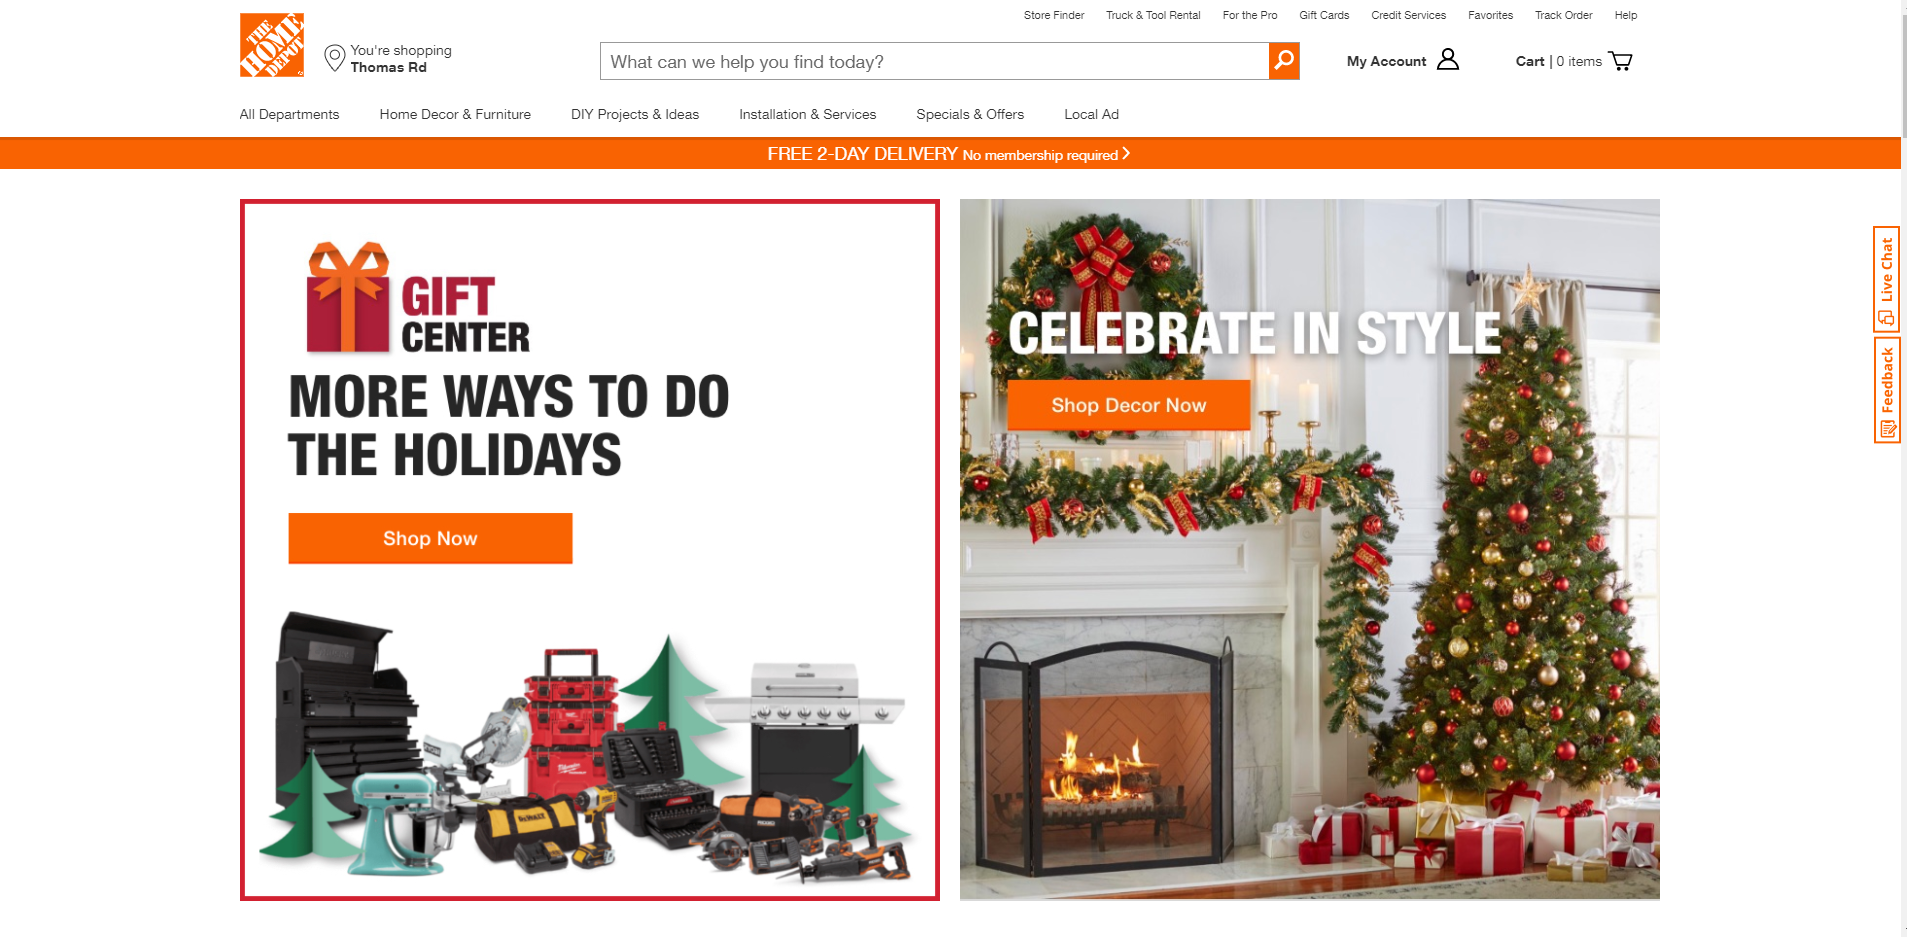 A screenshot of the Home Depot holiday website